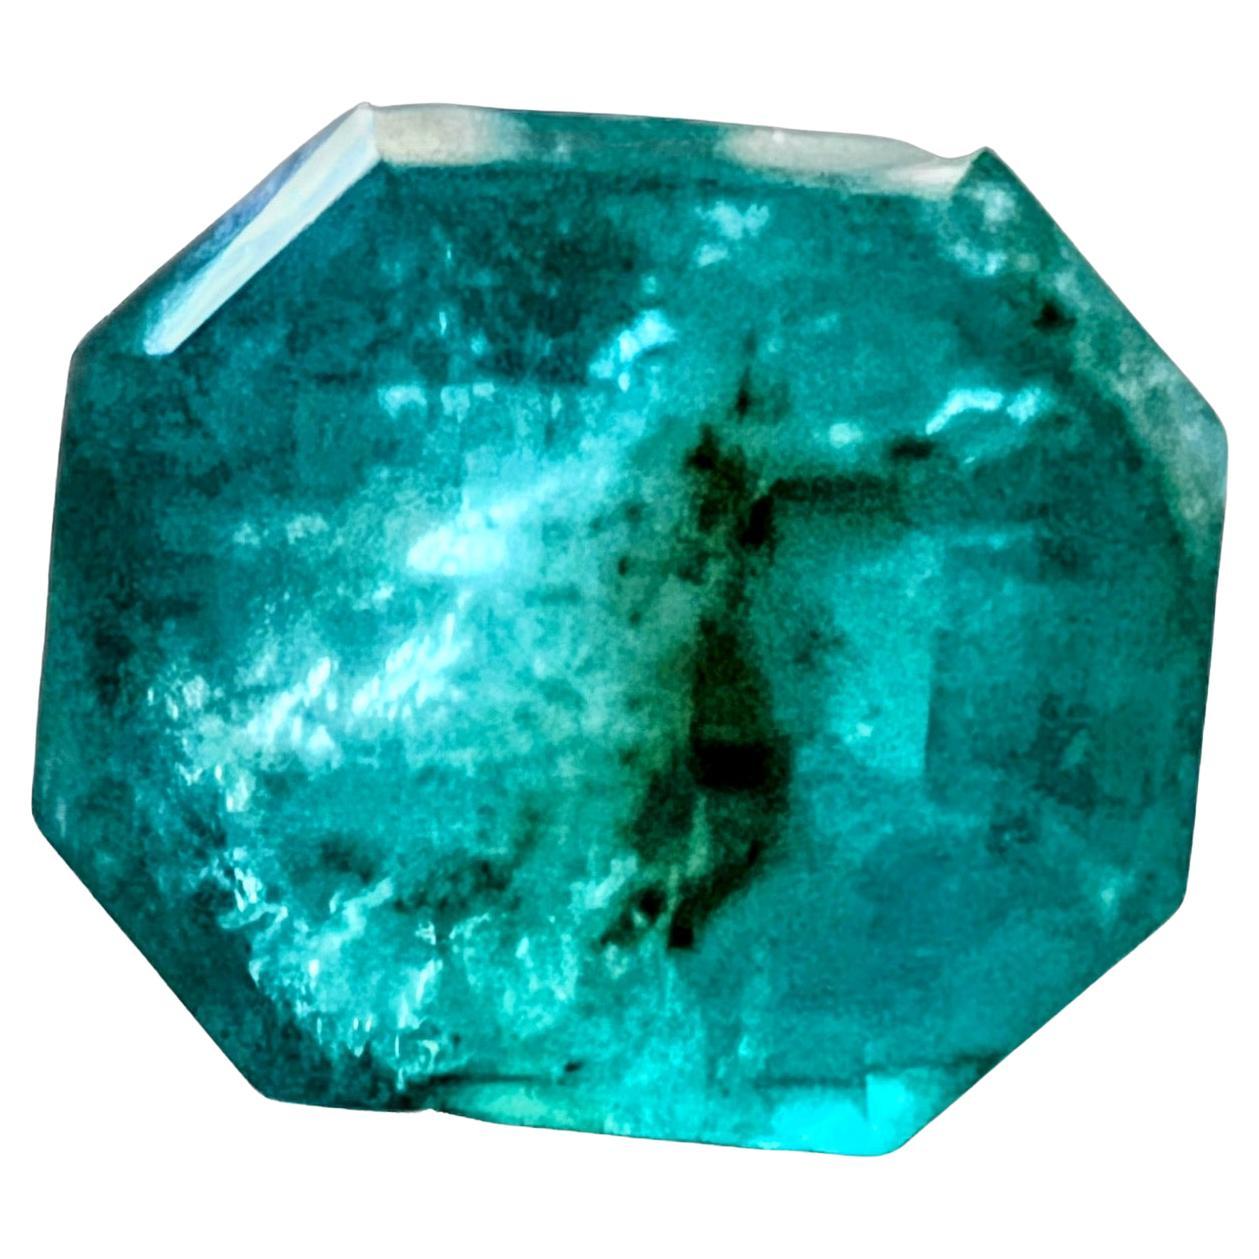 Artisan 4.55ct Octagonal Cut No-Oil Untreated Emerald Gemstone For Sale